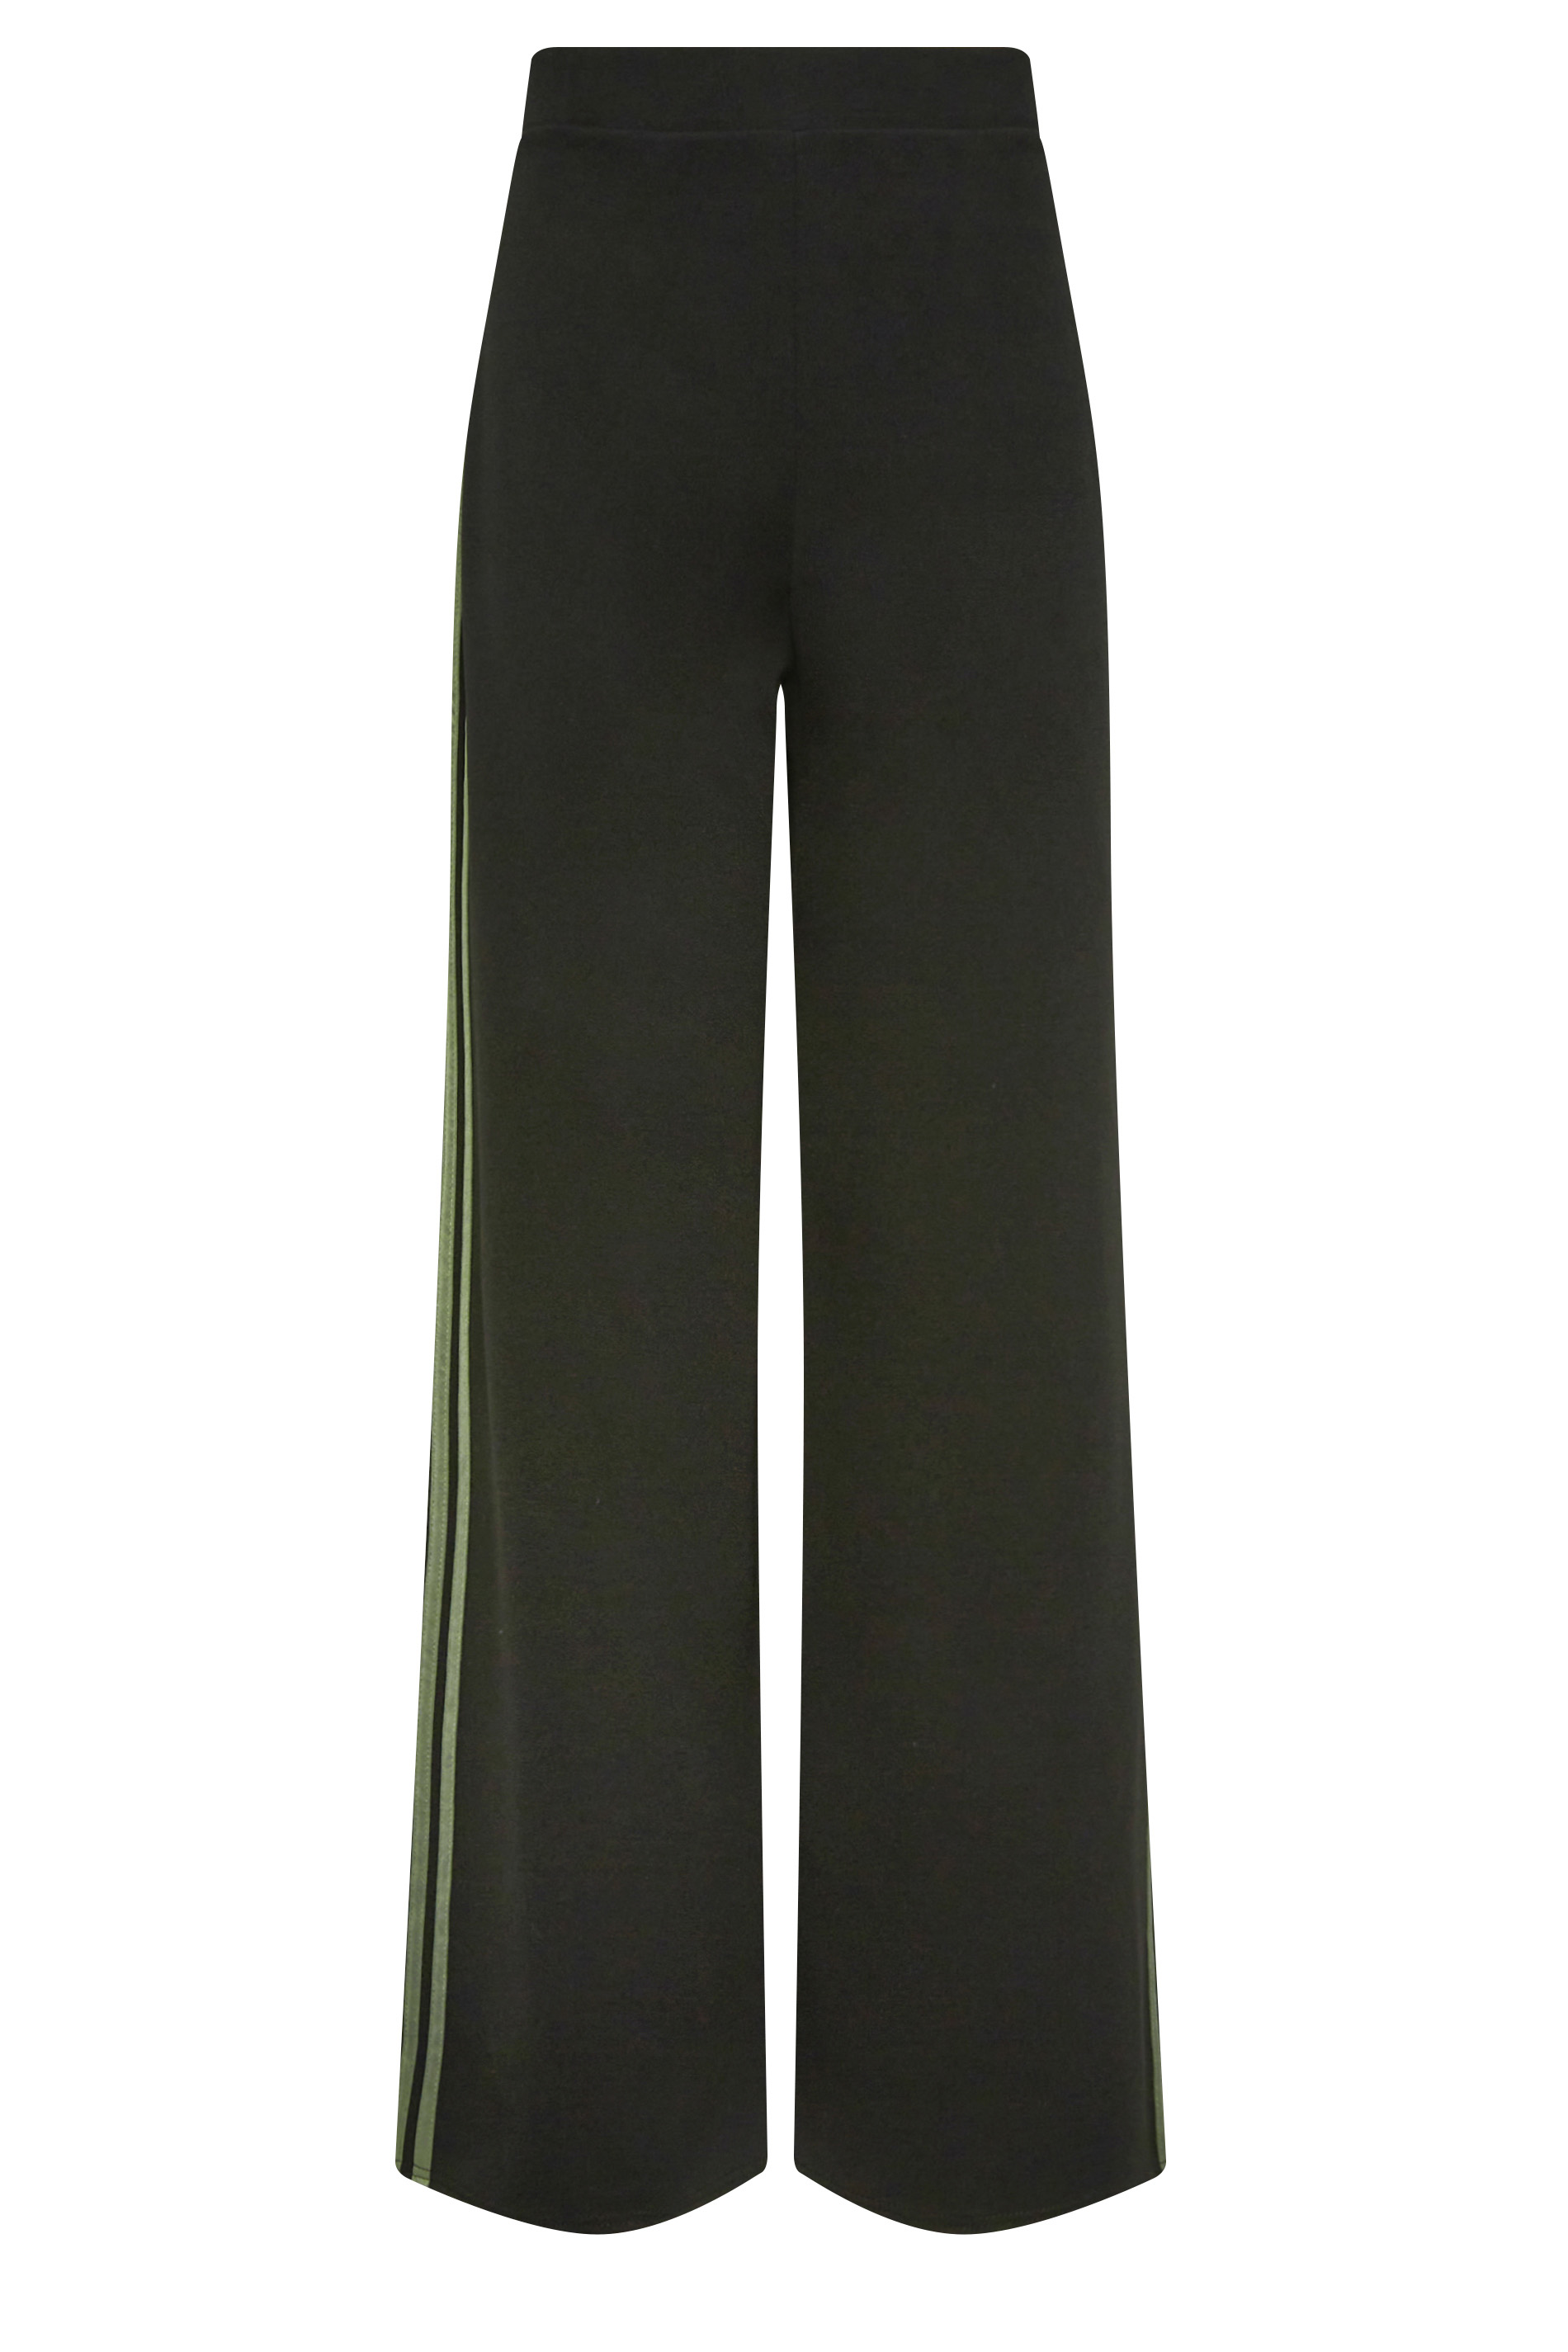 LTS Tall Black & Khaki Green Stripe Wide Leg Trousers